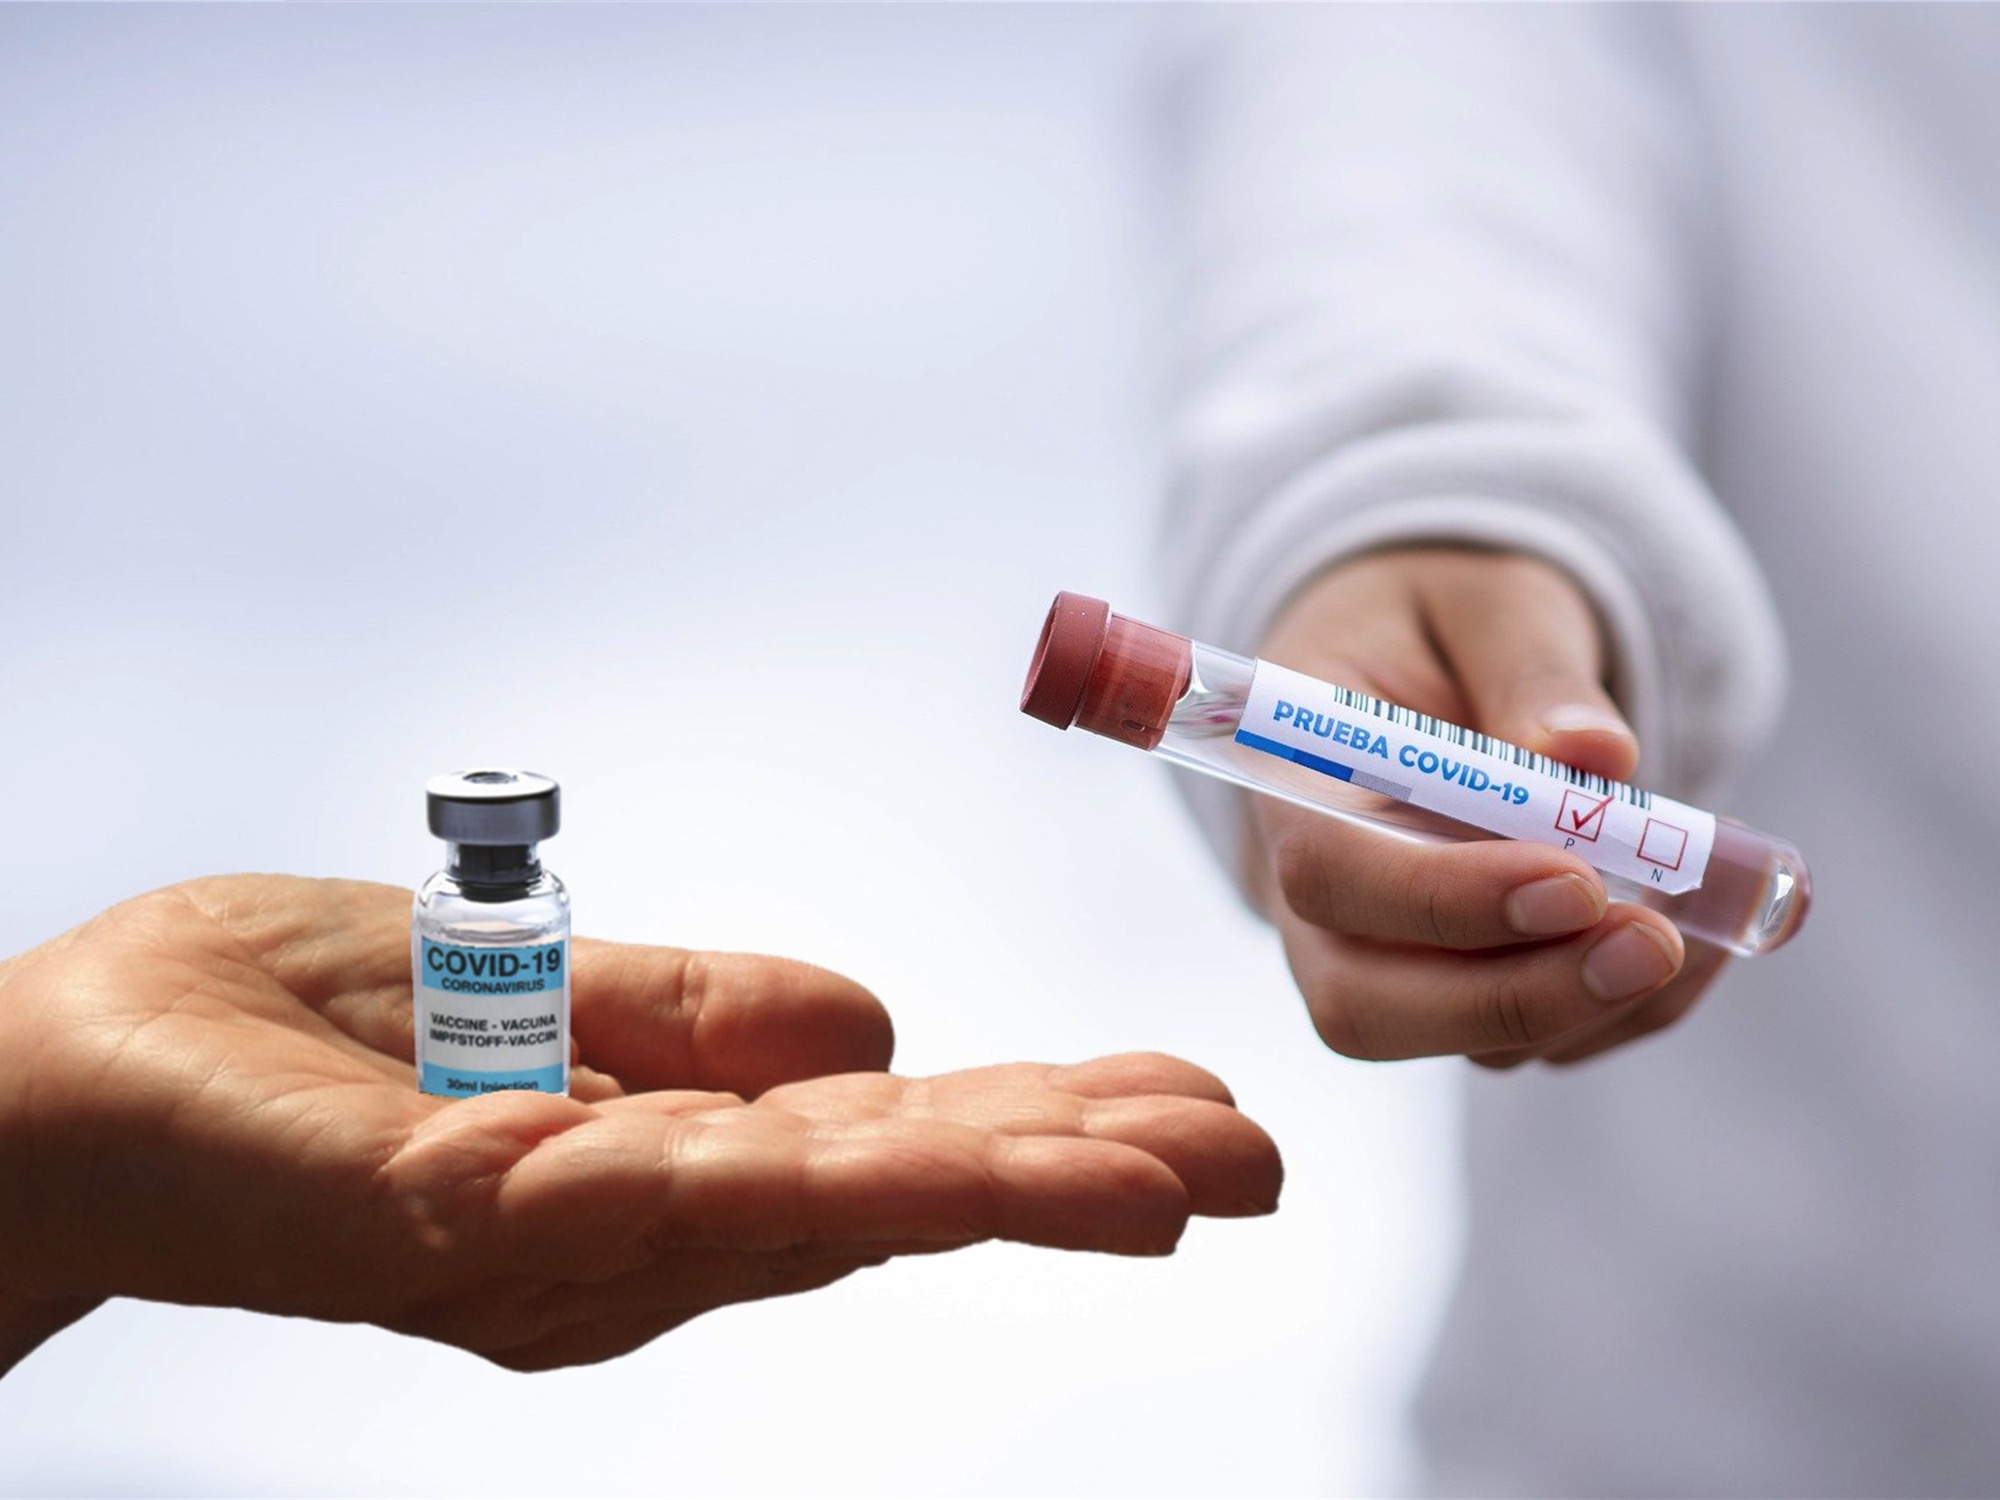 Johnson & Johnson’s COVID-19 vaccine just passed the FDA’s final test